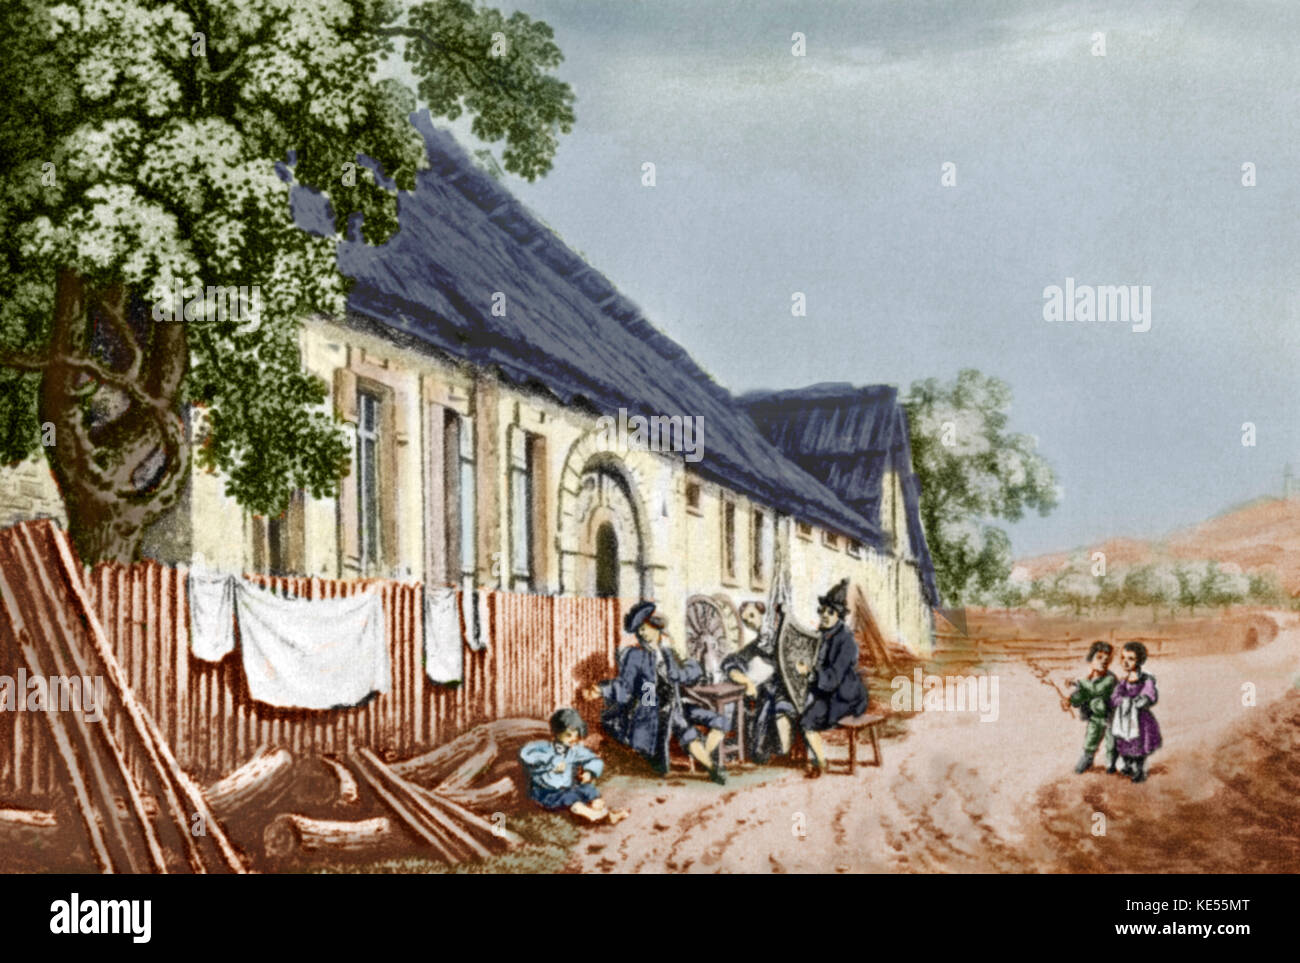 Franz Joseph Haydn - birth house in Rohrau, Austria. Austrian composer, 31 March 1732 - 31 May 1809. Colourised version. Stock Photo